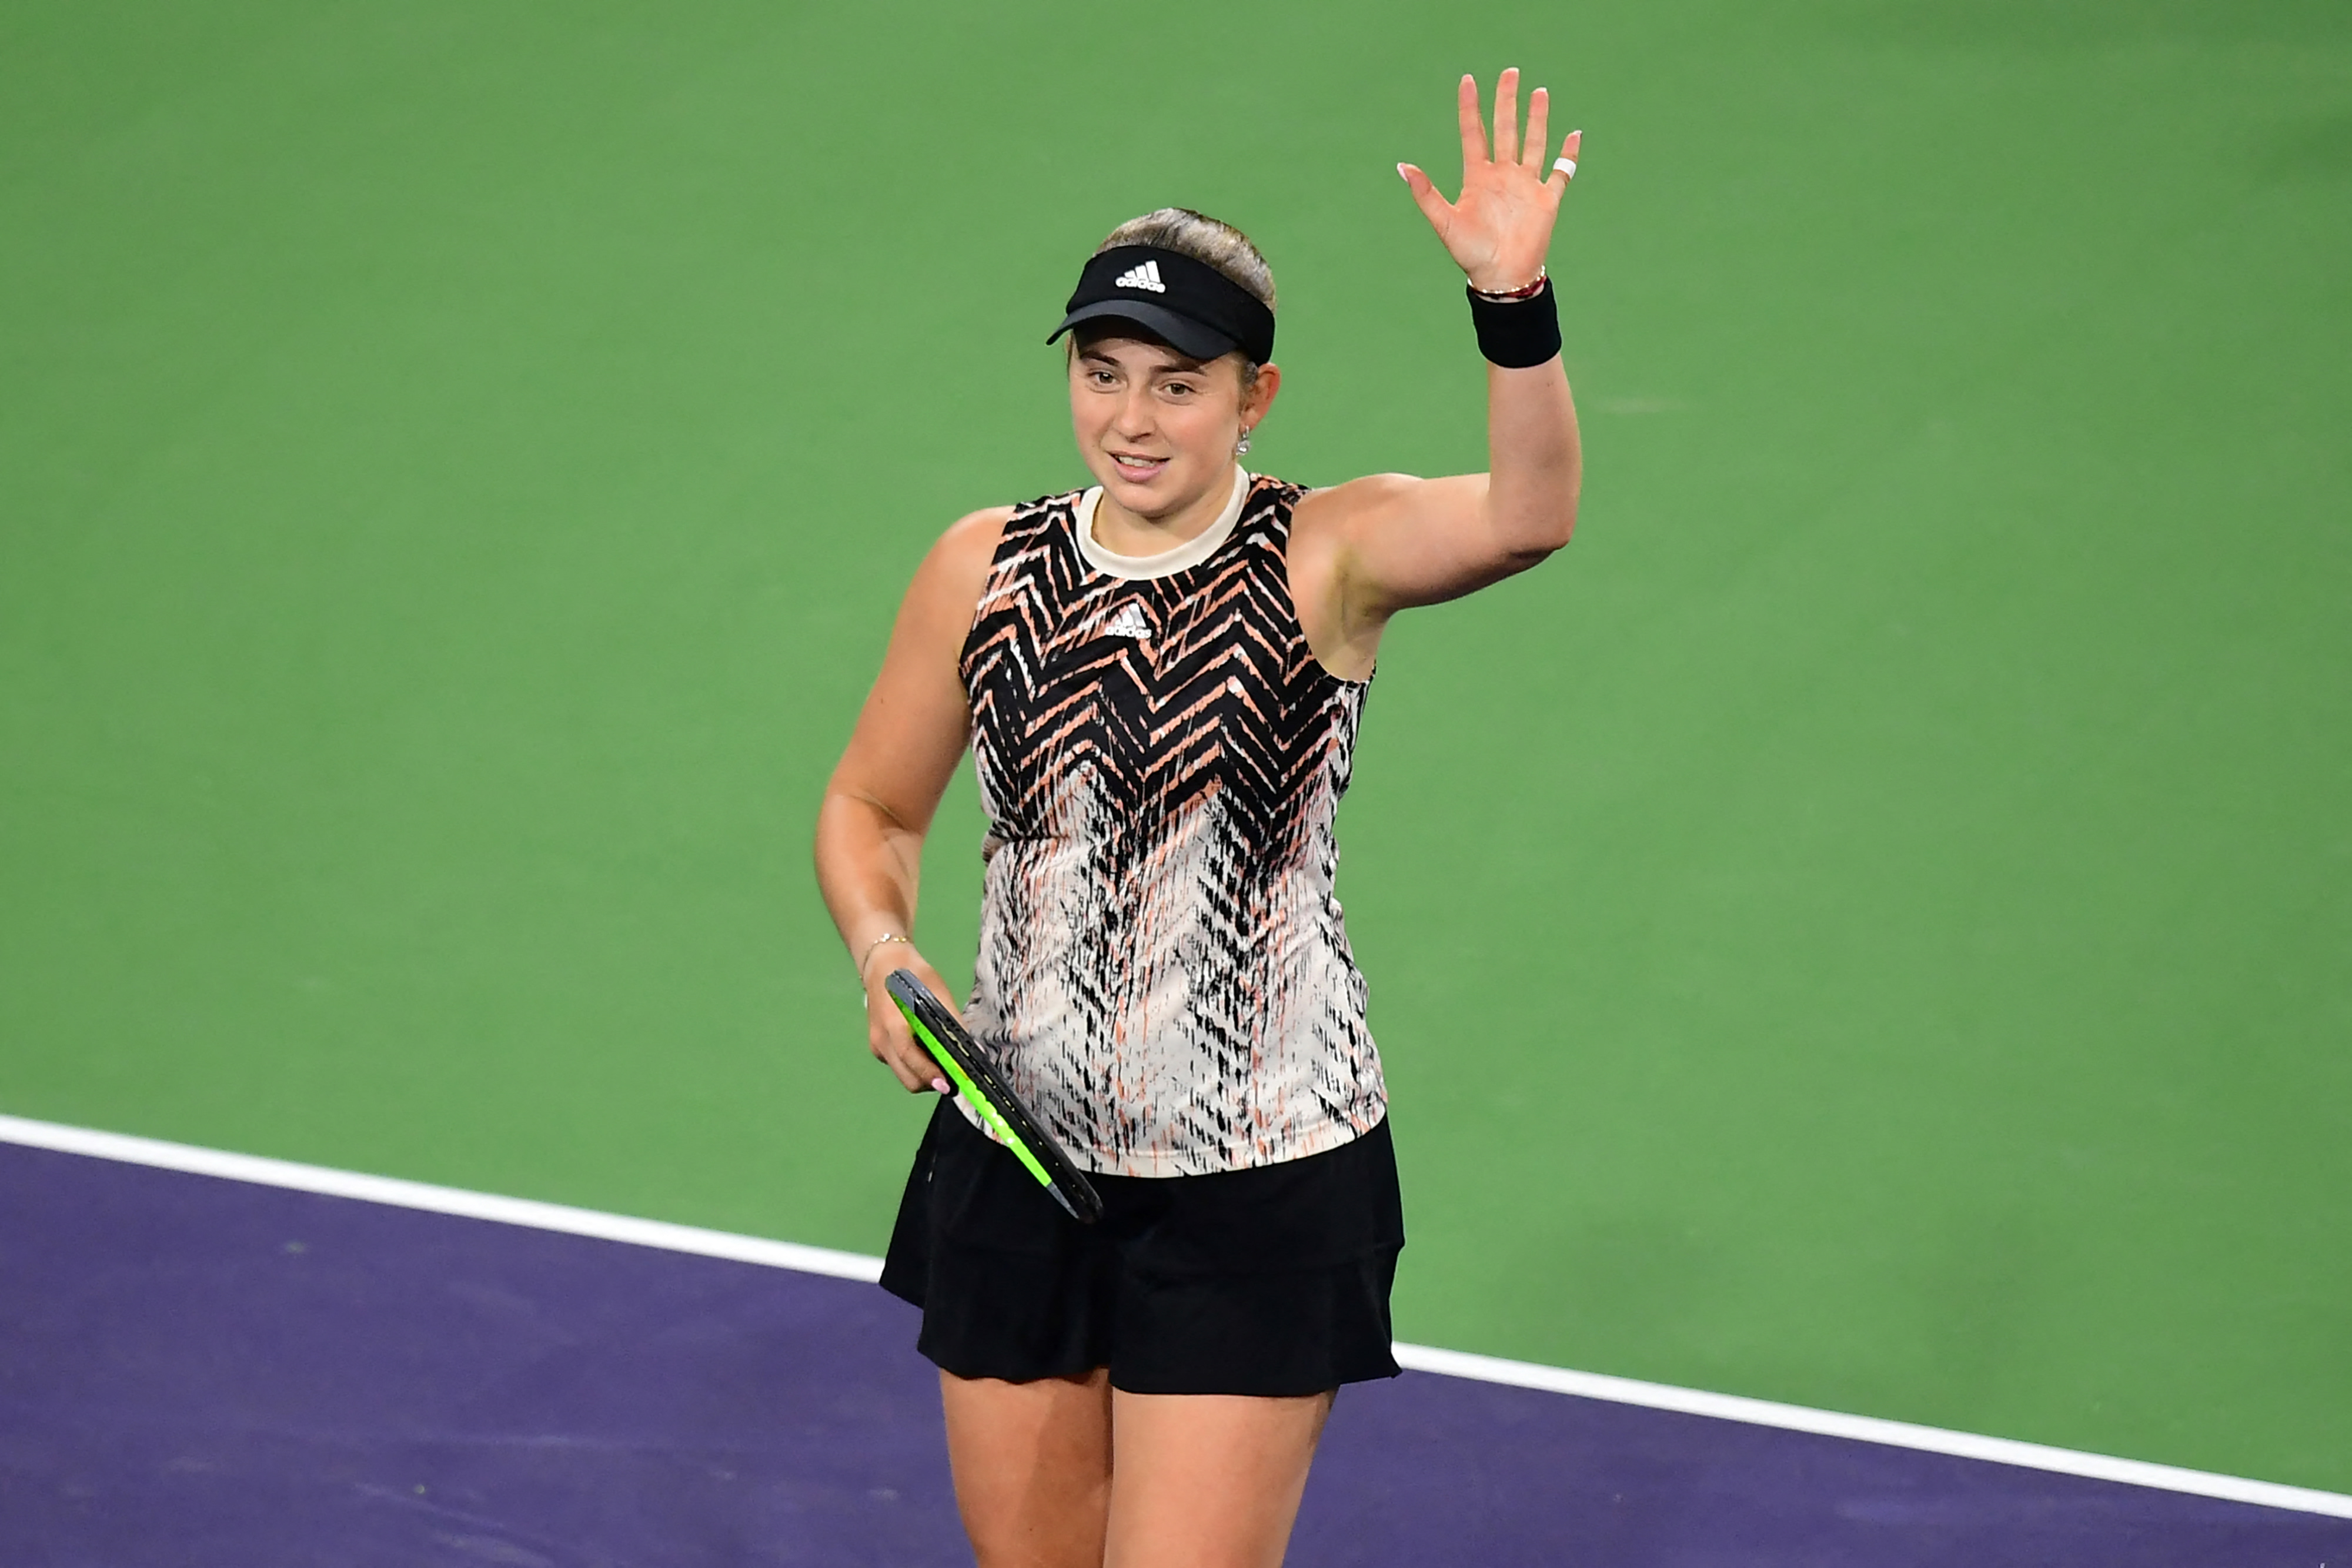 First semifinal set Victoria Azarenka, Jelena Ostapenko edge into final four after ousting American hopes